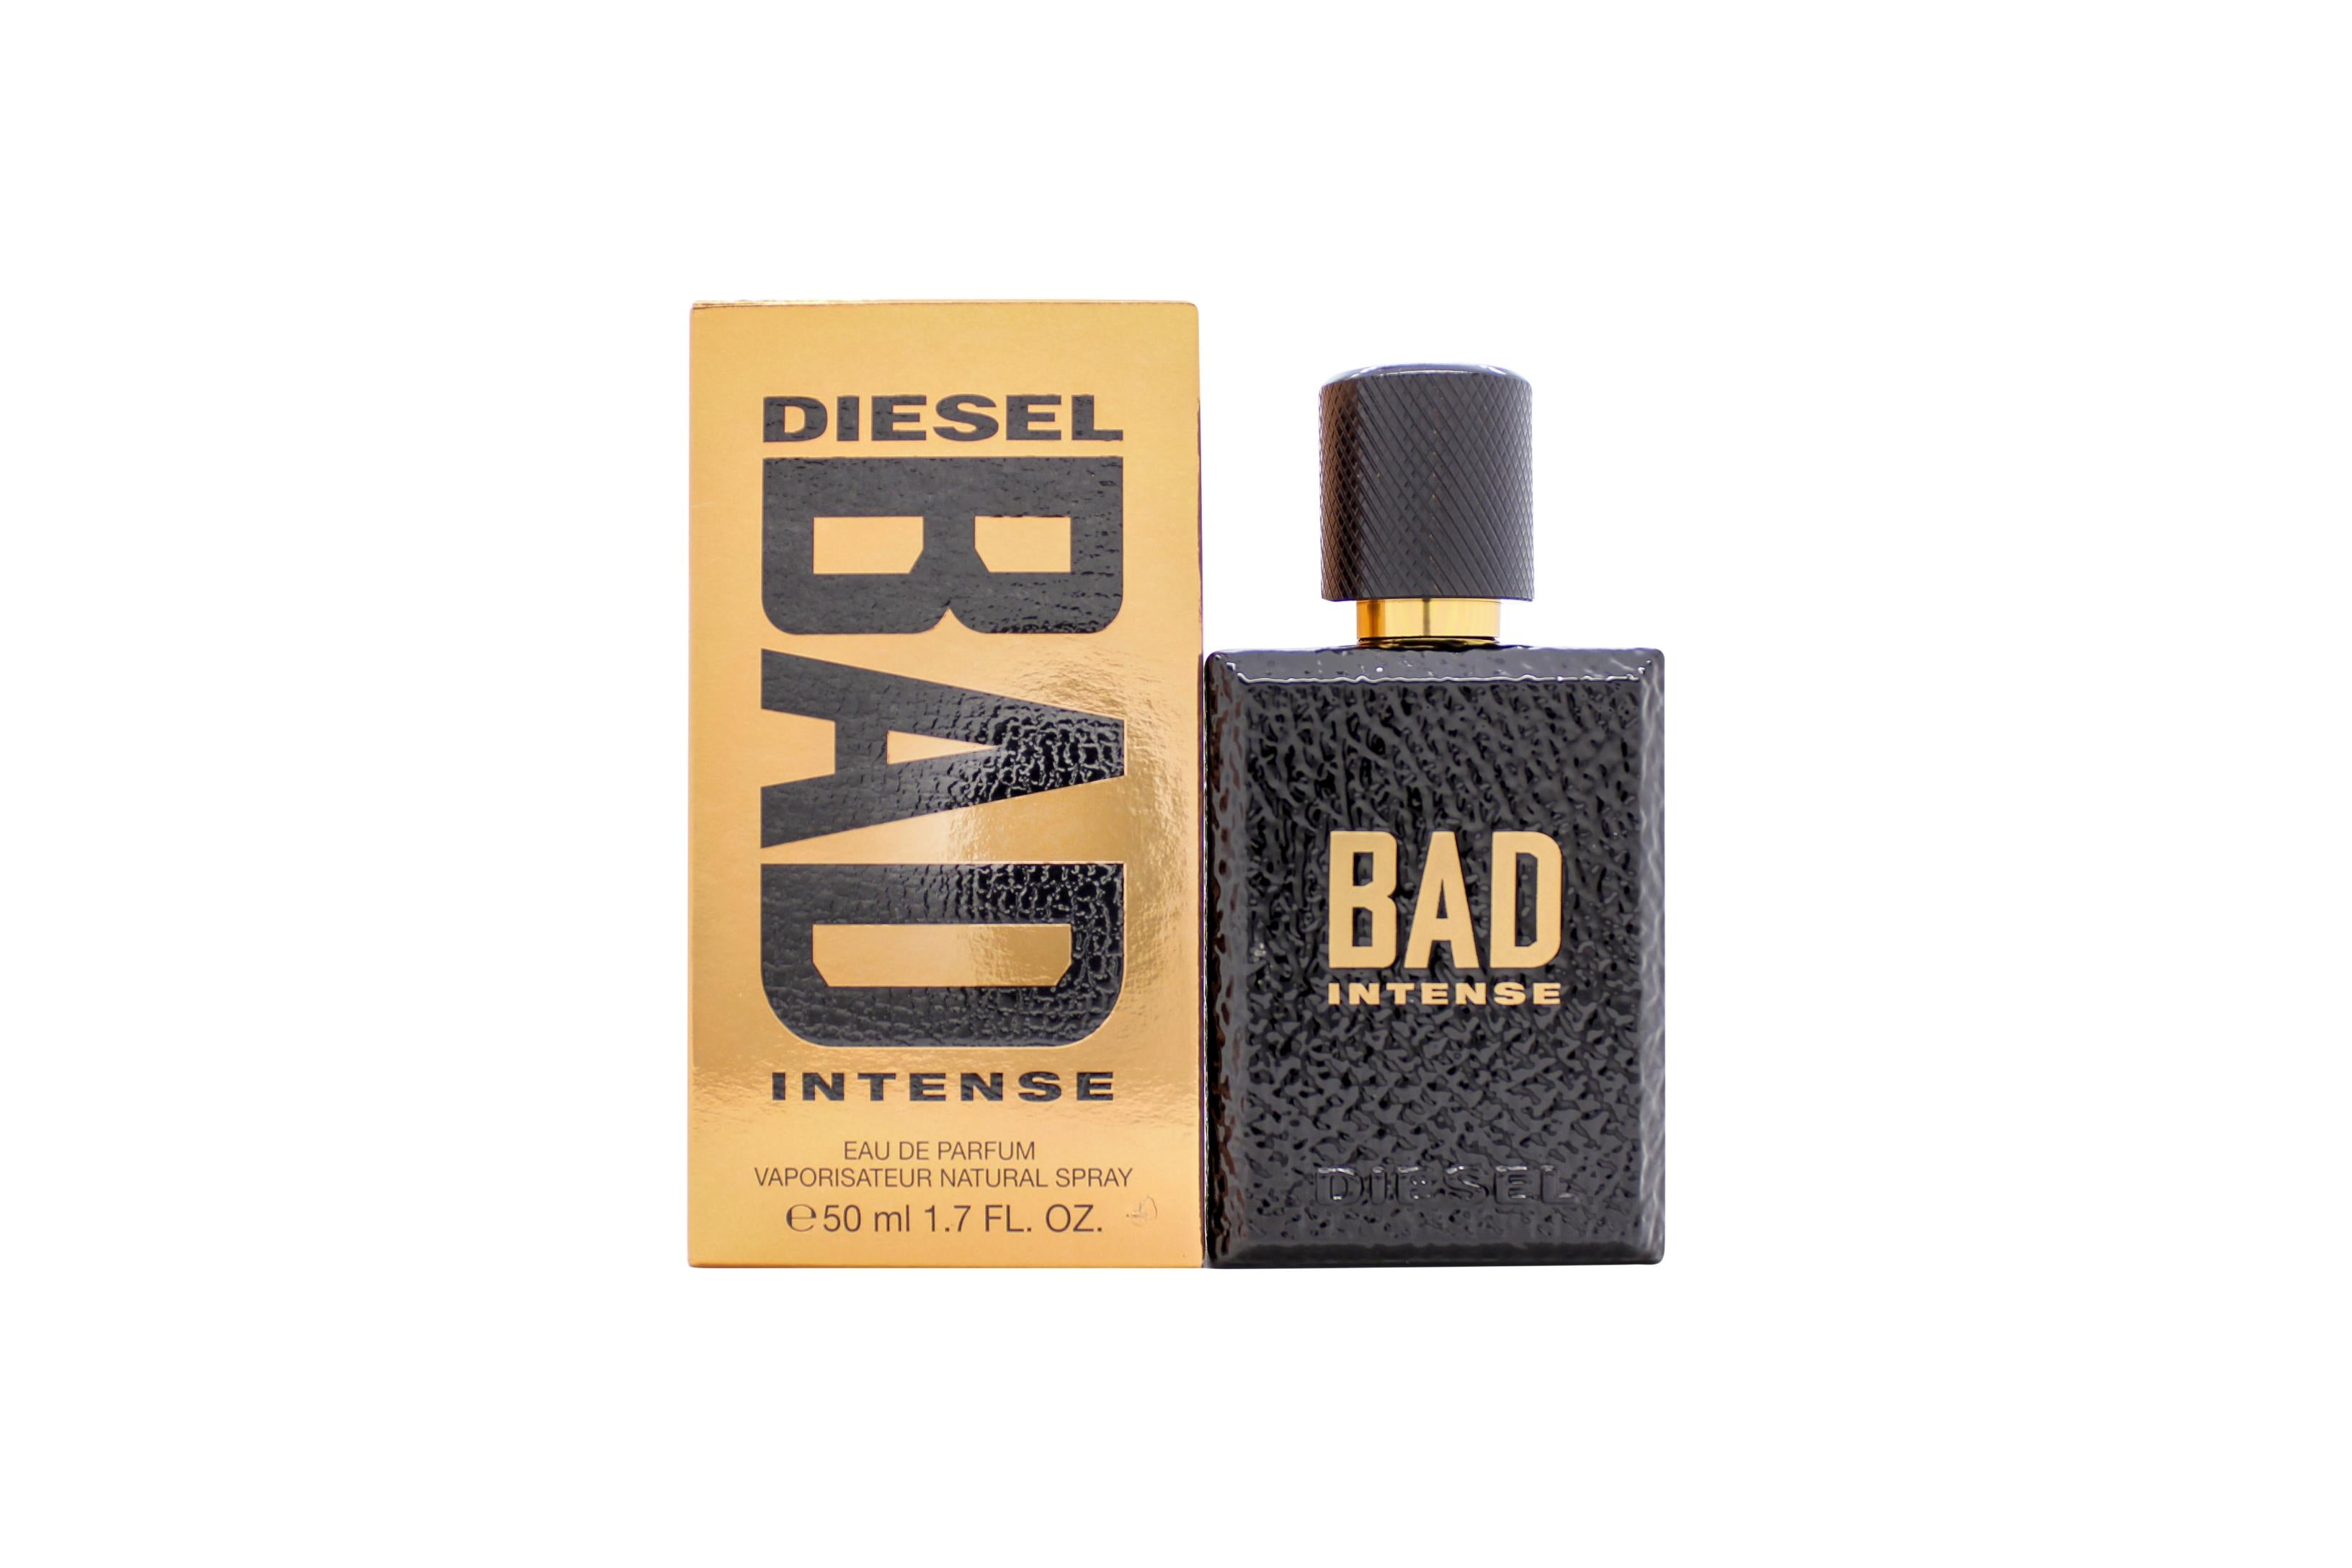 View Diesel Bad Intense Eau de Parfum 50ml Spray information